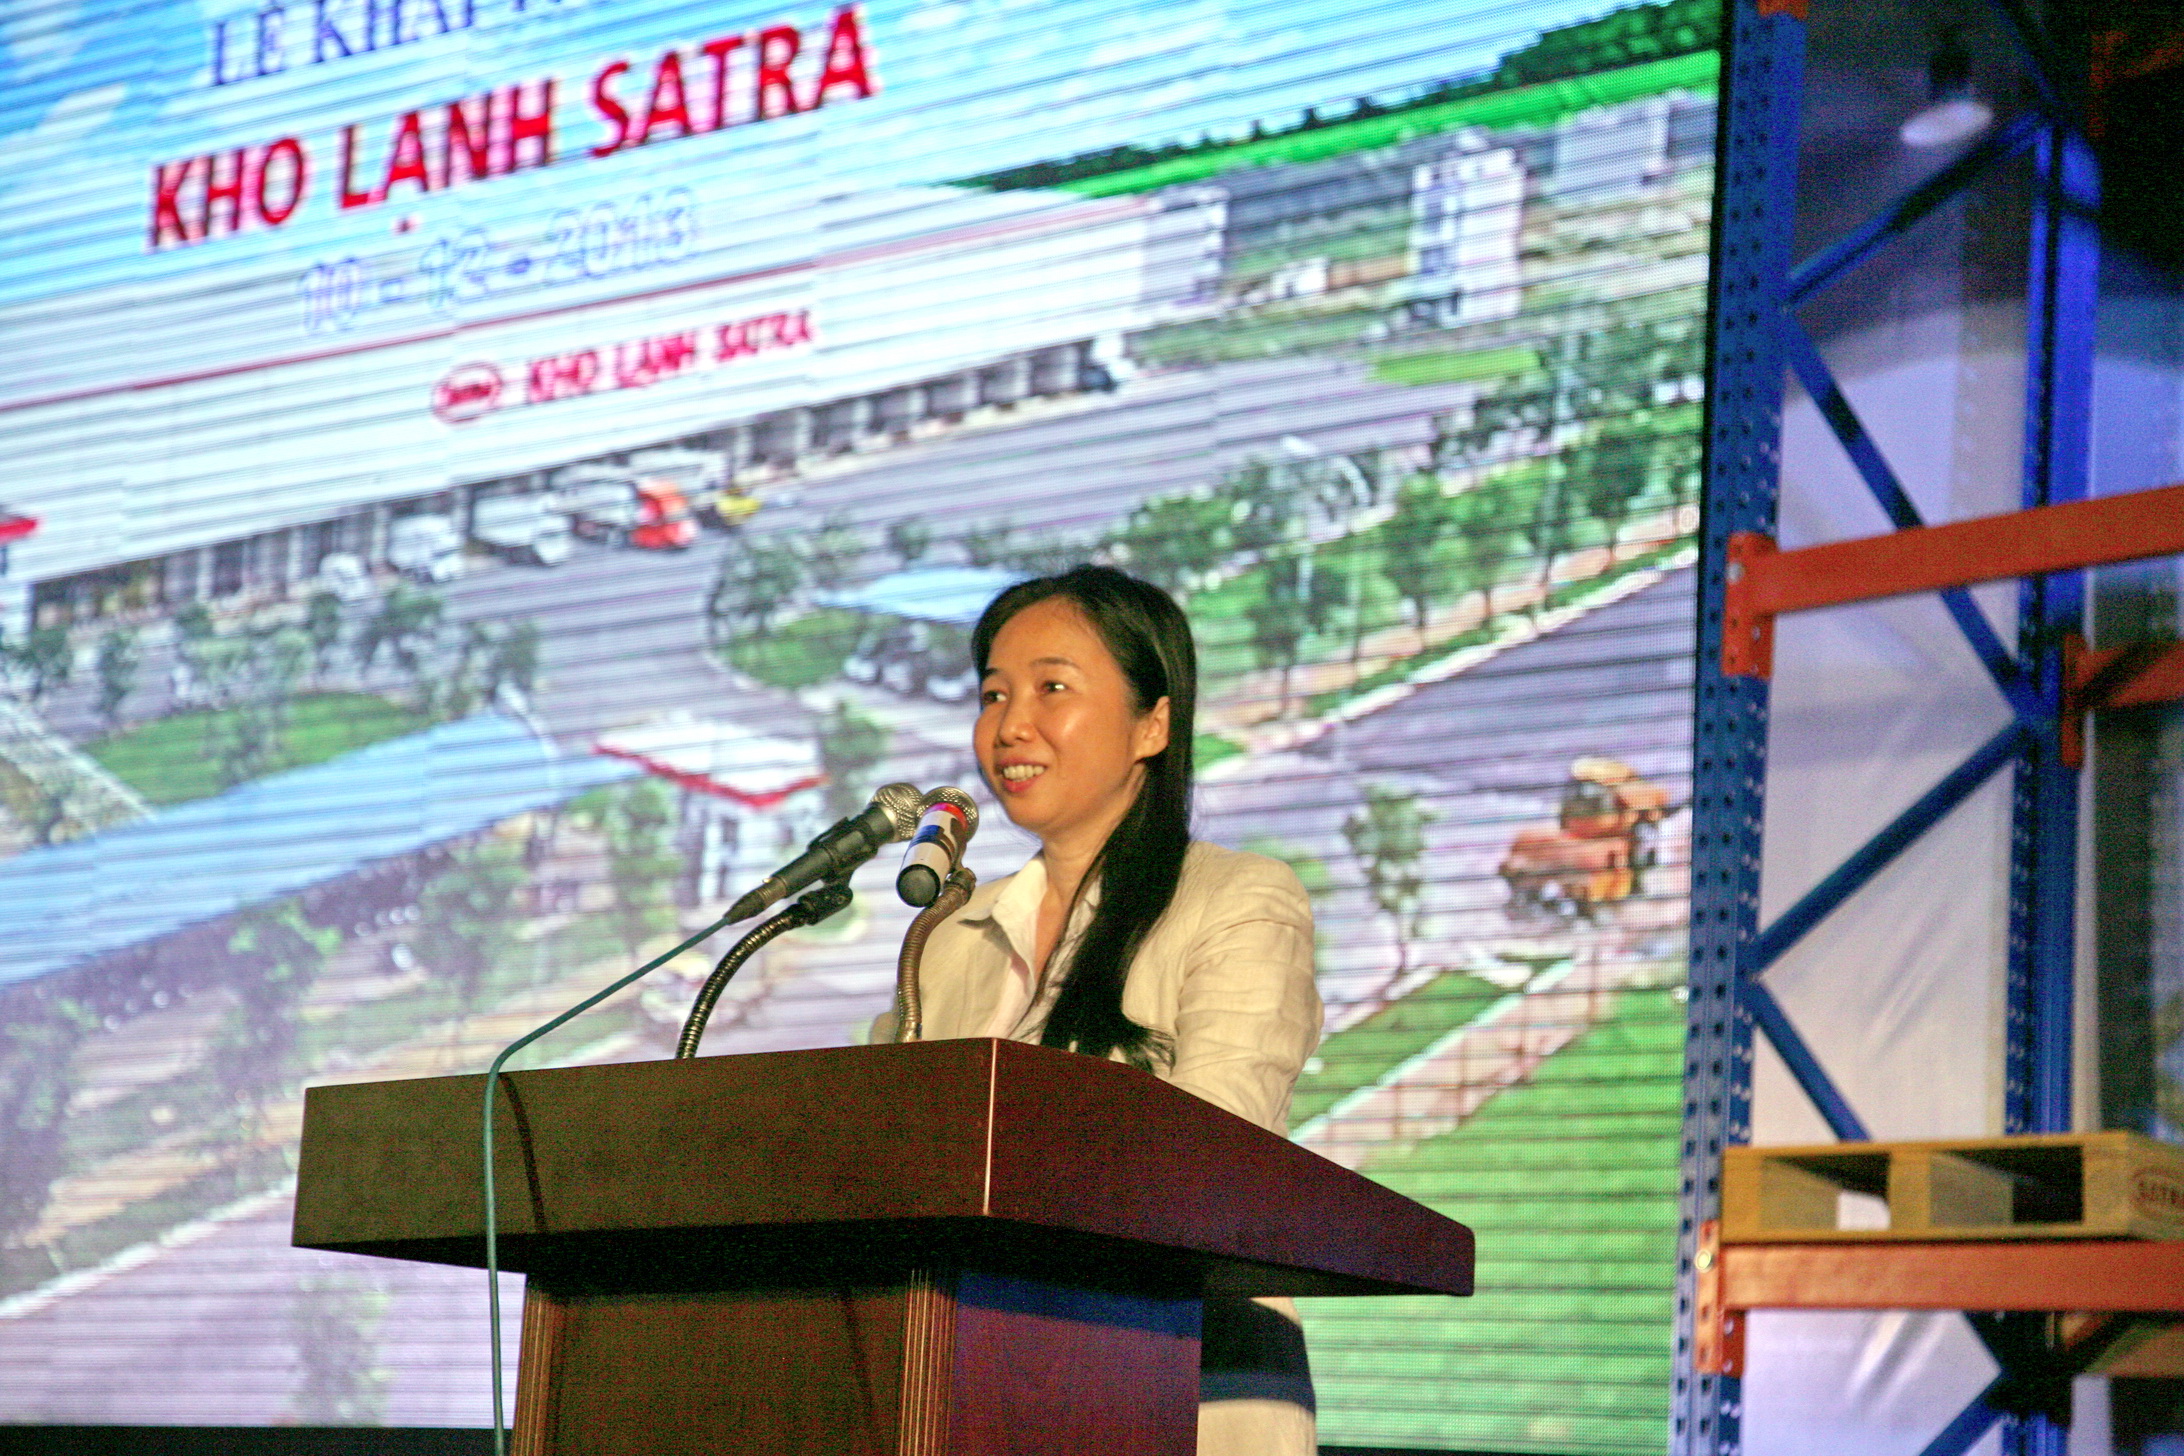  Businesswoman Le Minh Trang in a speech